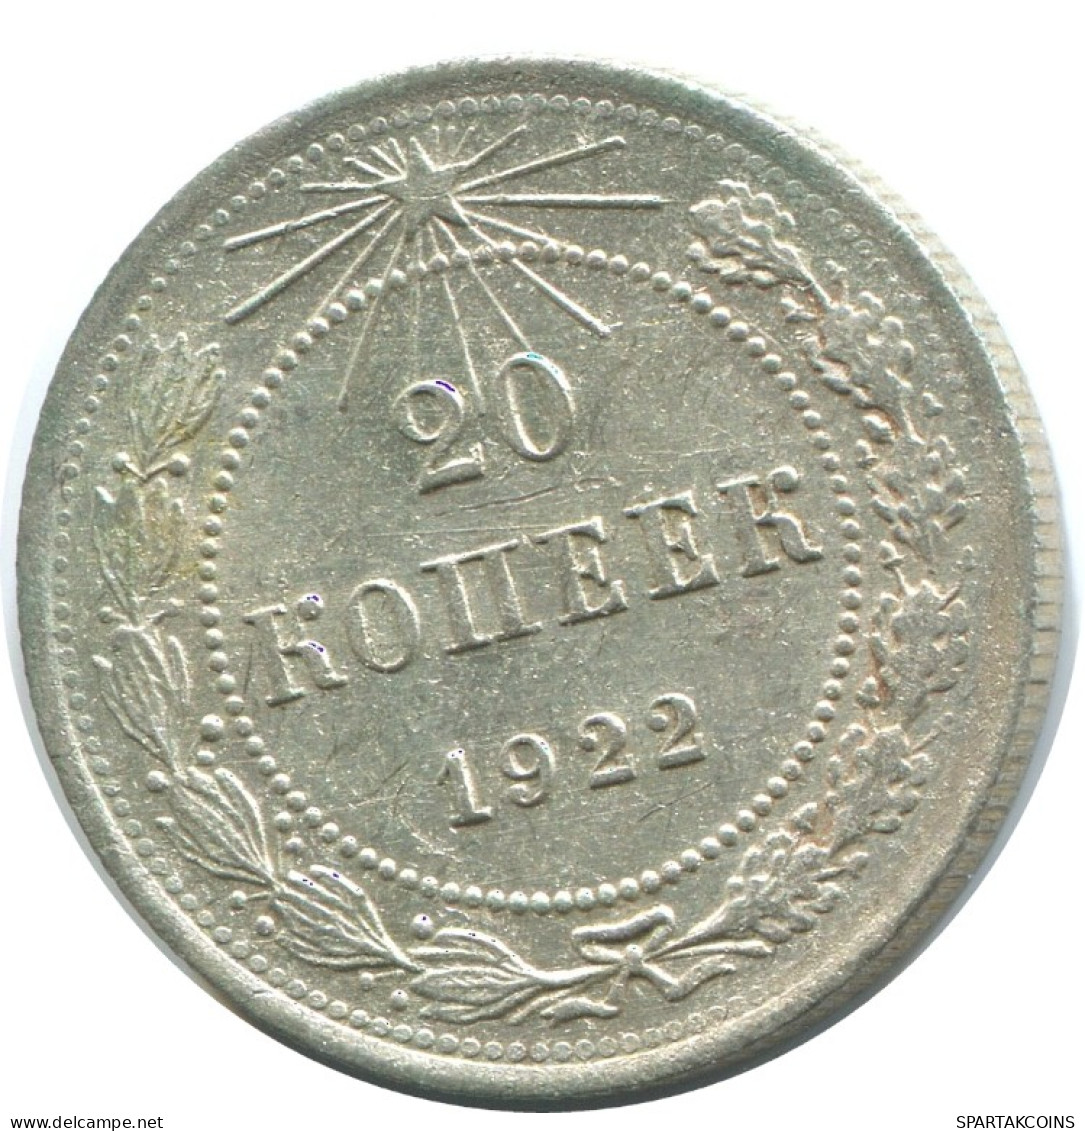 20 KOPEKS 1923 RUSSIA RSFSR SILVER Coin HIGH GRADE #AF361.4.U.A - Rusia